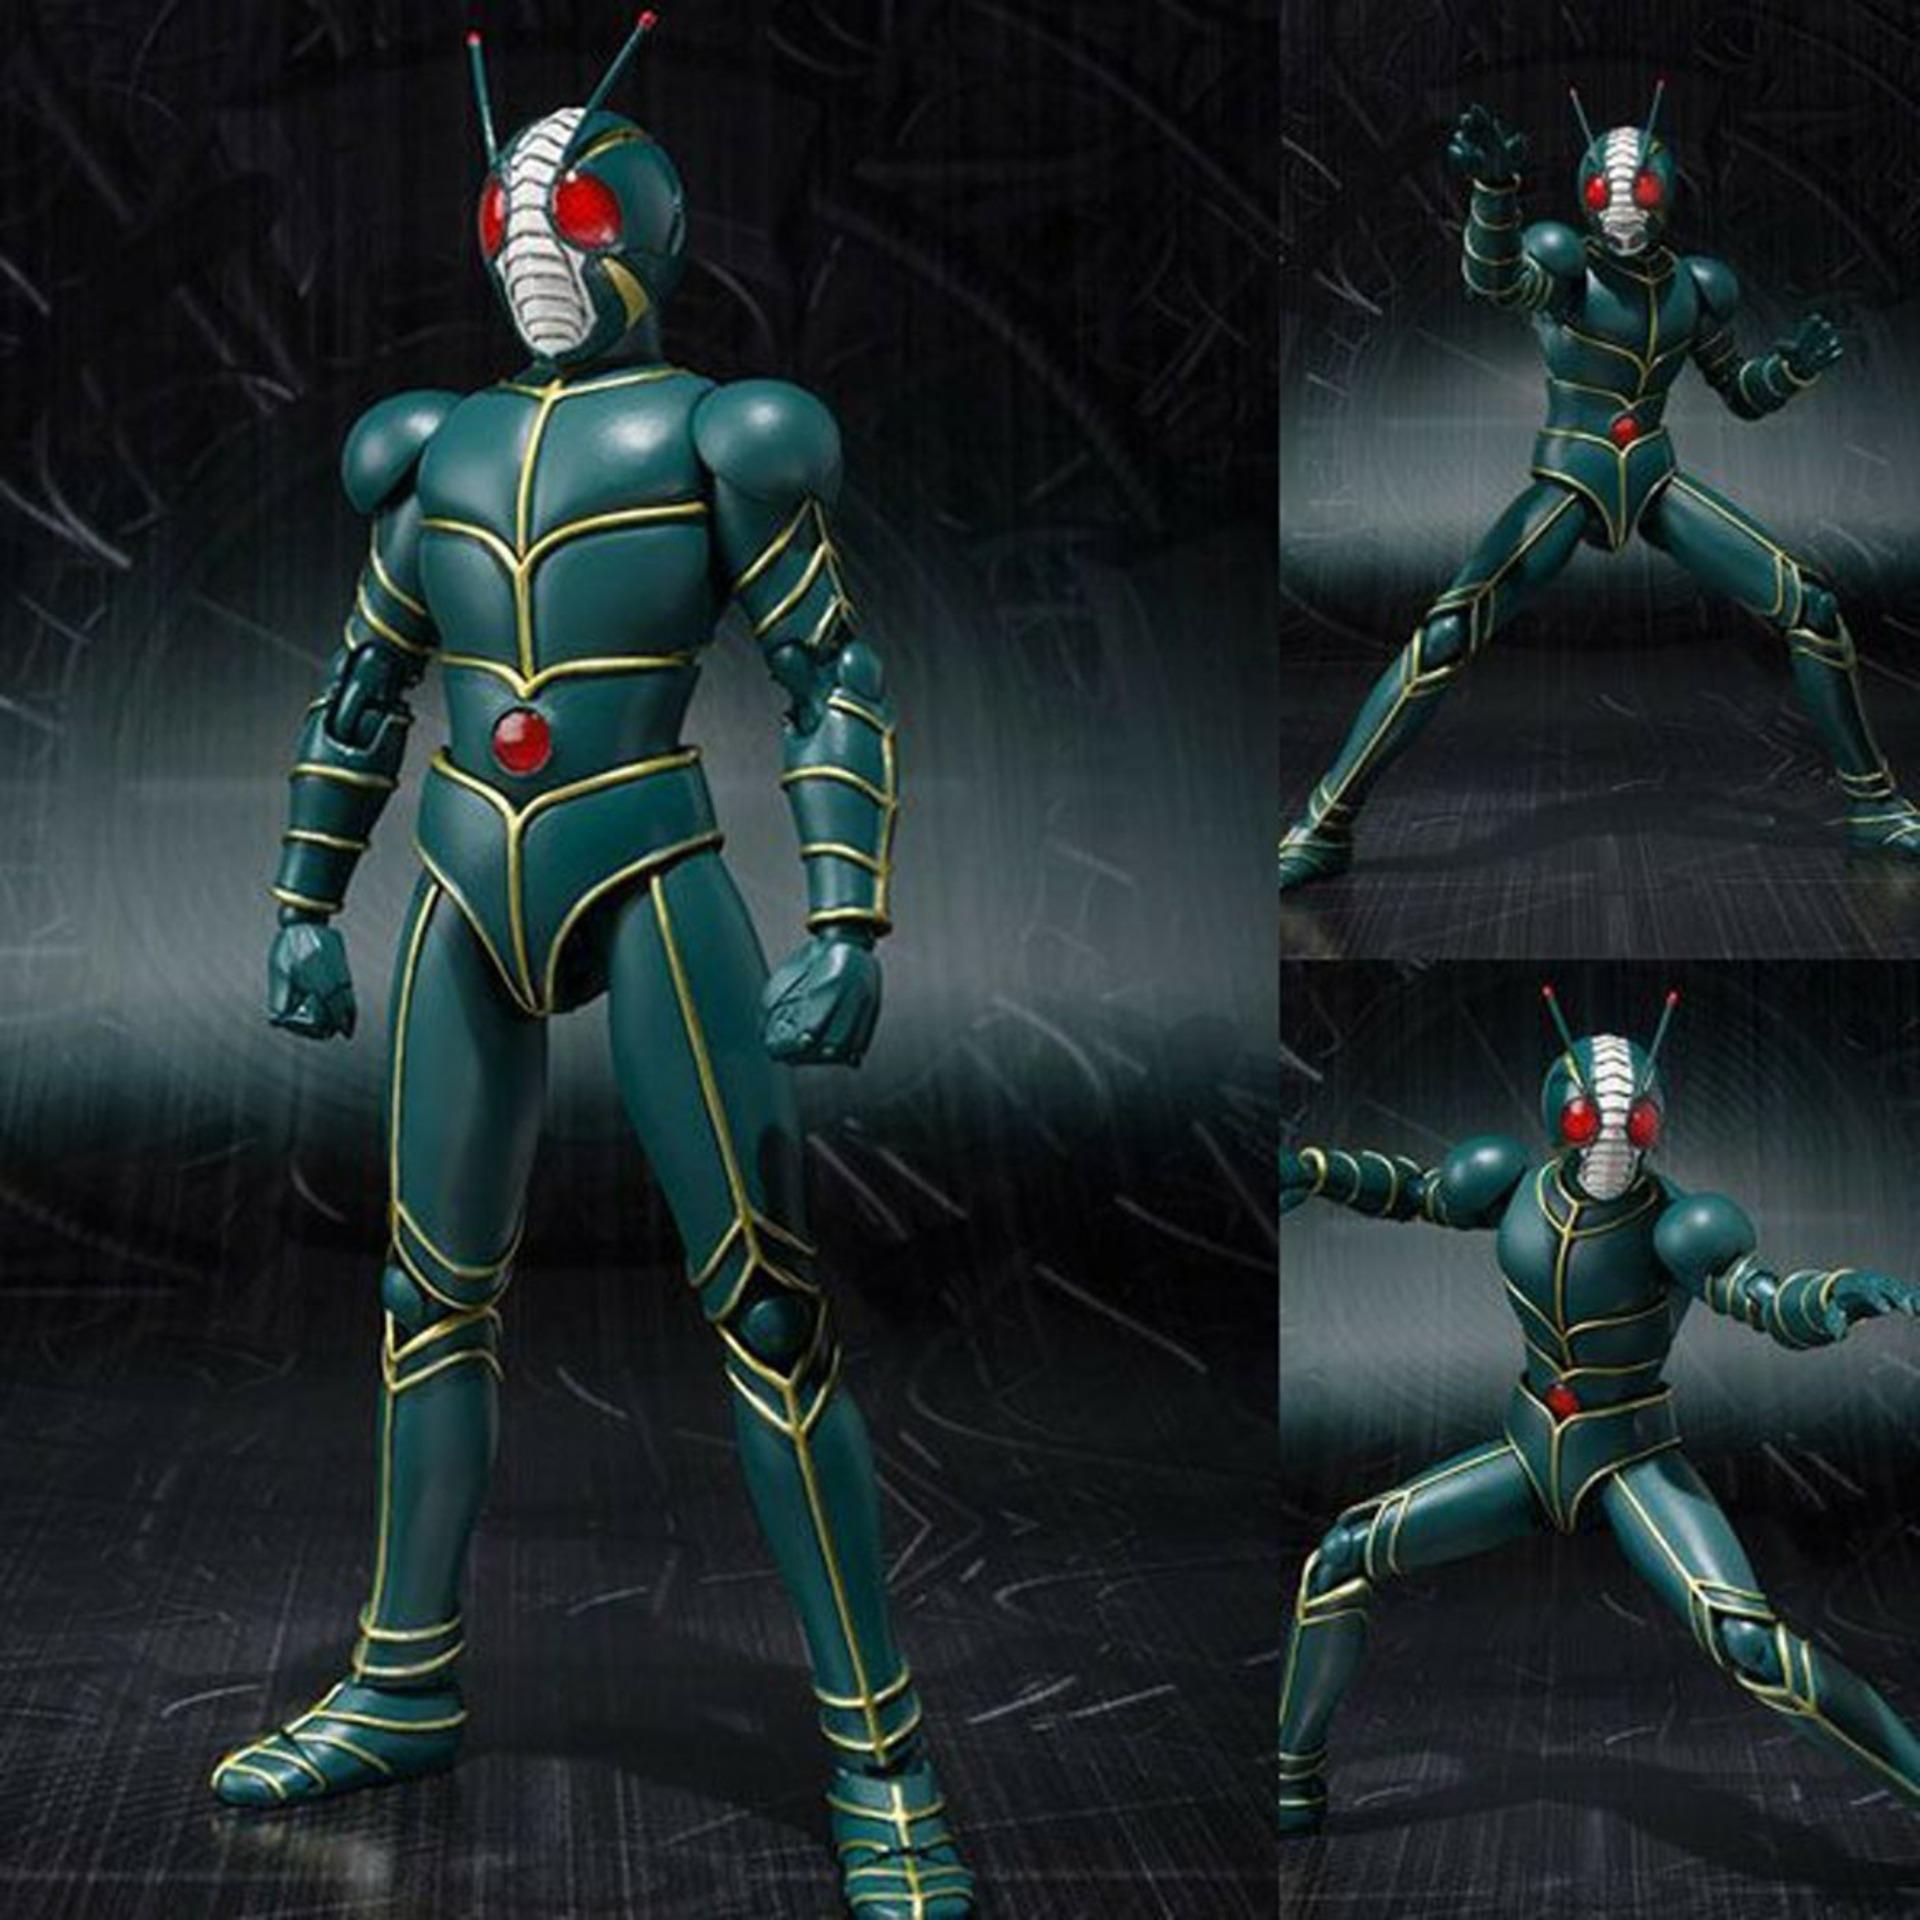 Model โมเดล งานแท้ 100ndai Tamashii Nations S.H. Figuarts Kamen Rider Masked ZO ไอ้มดแดง มาสค์ไรเดอร์ ZO คาเมนไรเดอร์ Ver Figma ฟิกม่า Anime ขยับแขน-ขาได้ ของขวัญ Gift อนิเมะ การ์ตูน มังงะ Doll ตุ๊กตา manga Figure ฟิกเกอร์